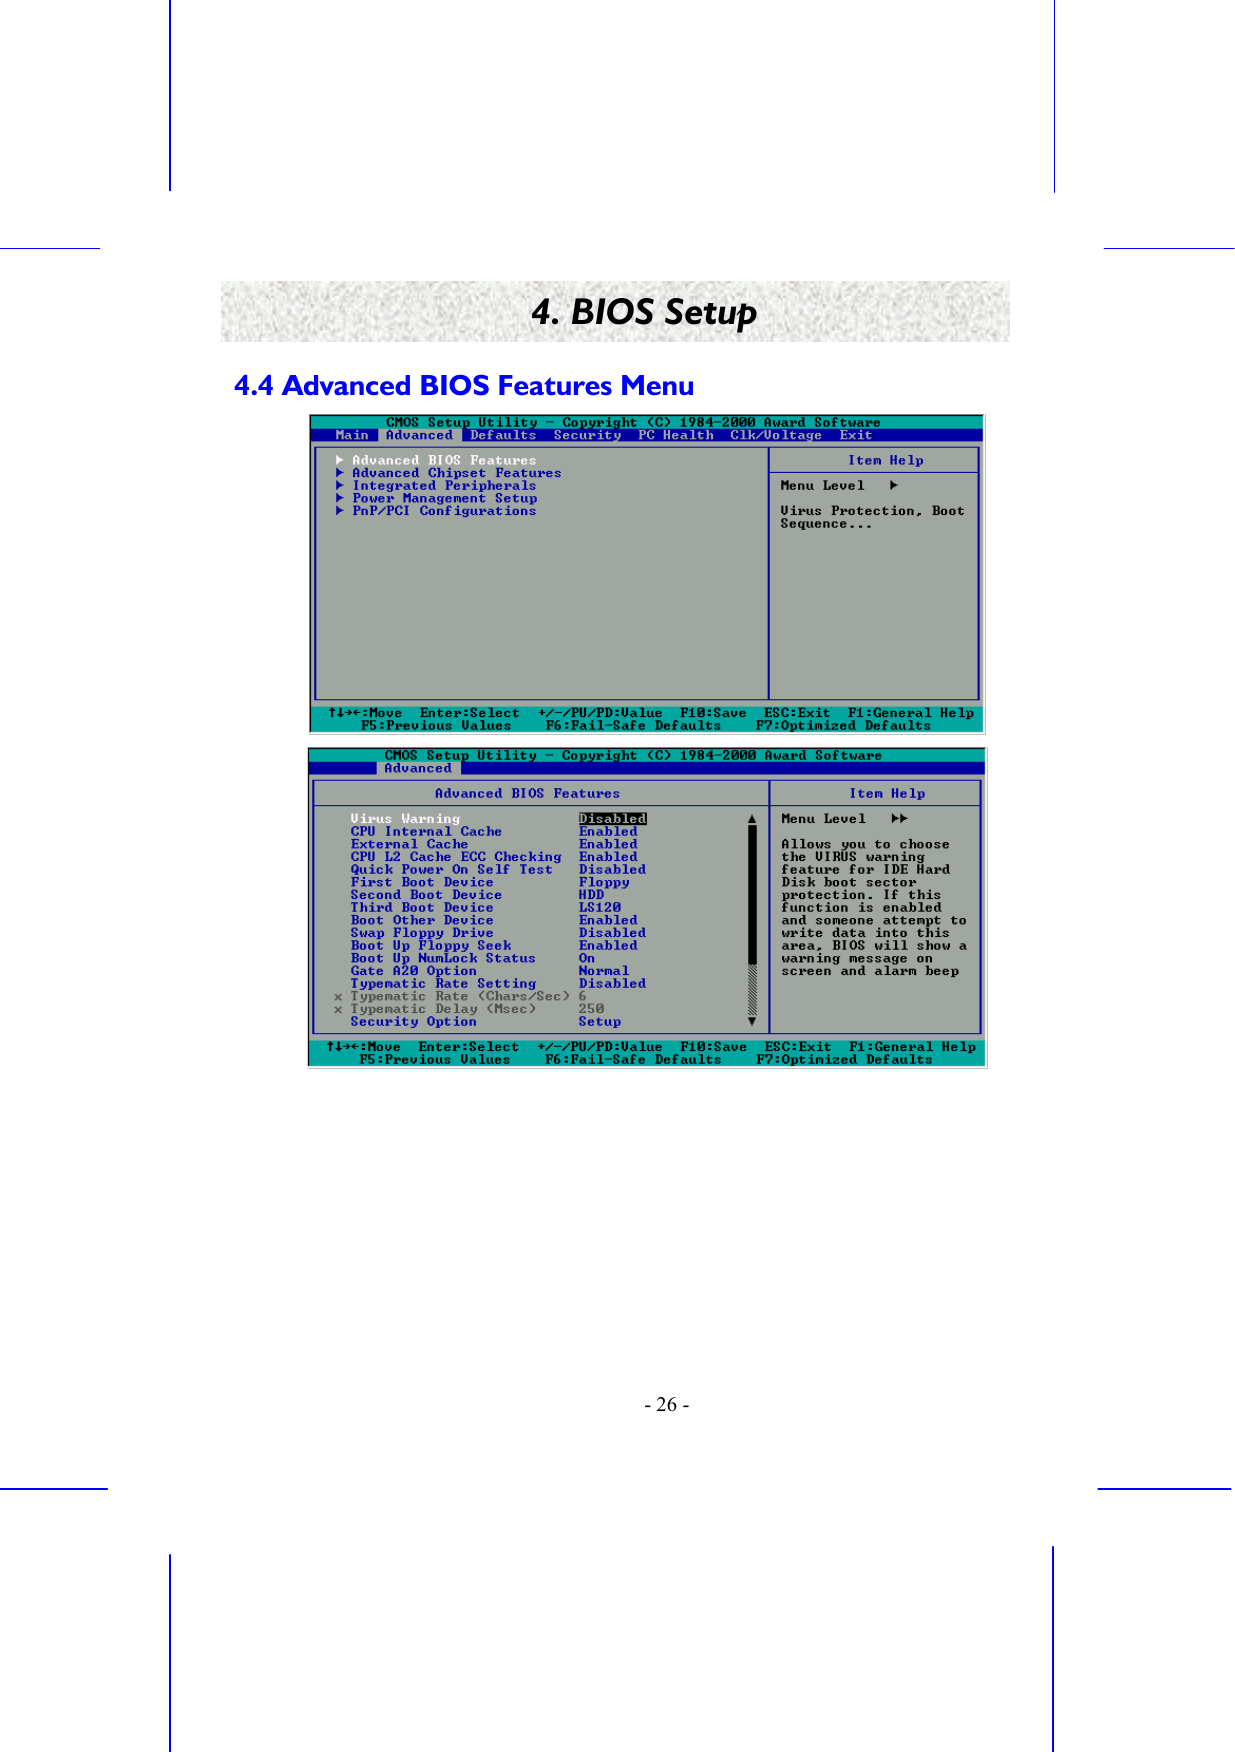    - 26 - 4. BIOS Setup 4.4 Advanced BIOS Features Menu   